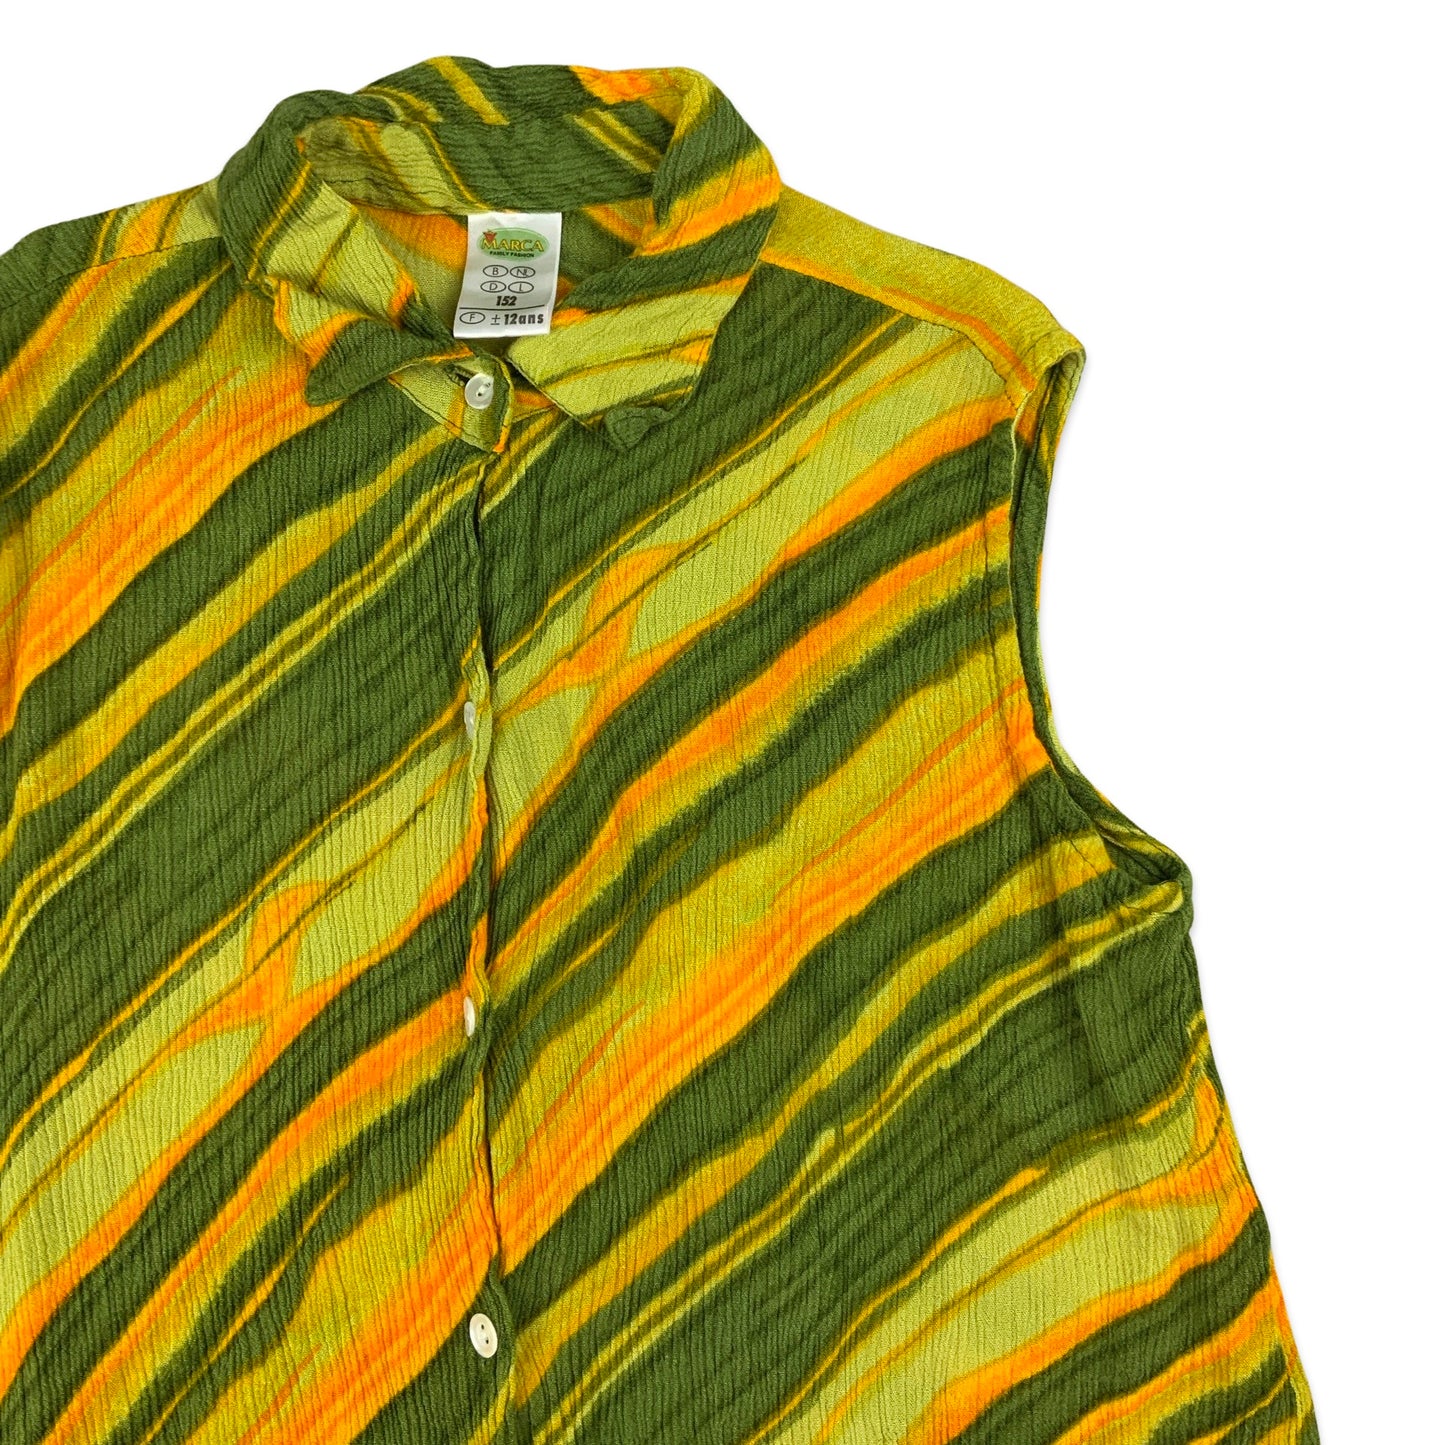 Yellow & Green Striped Sleeveless Blouse 4 6